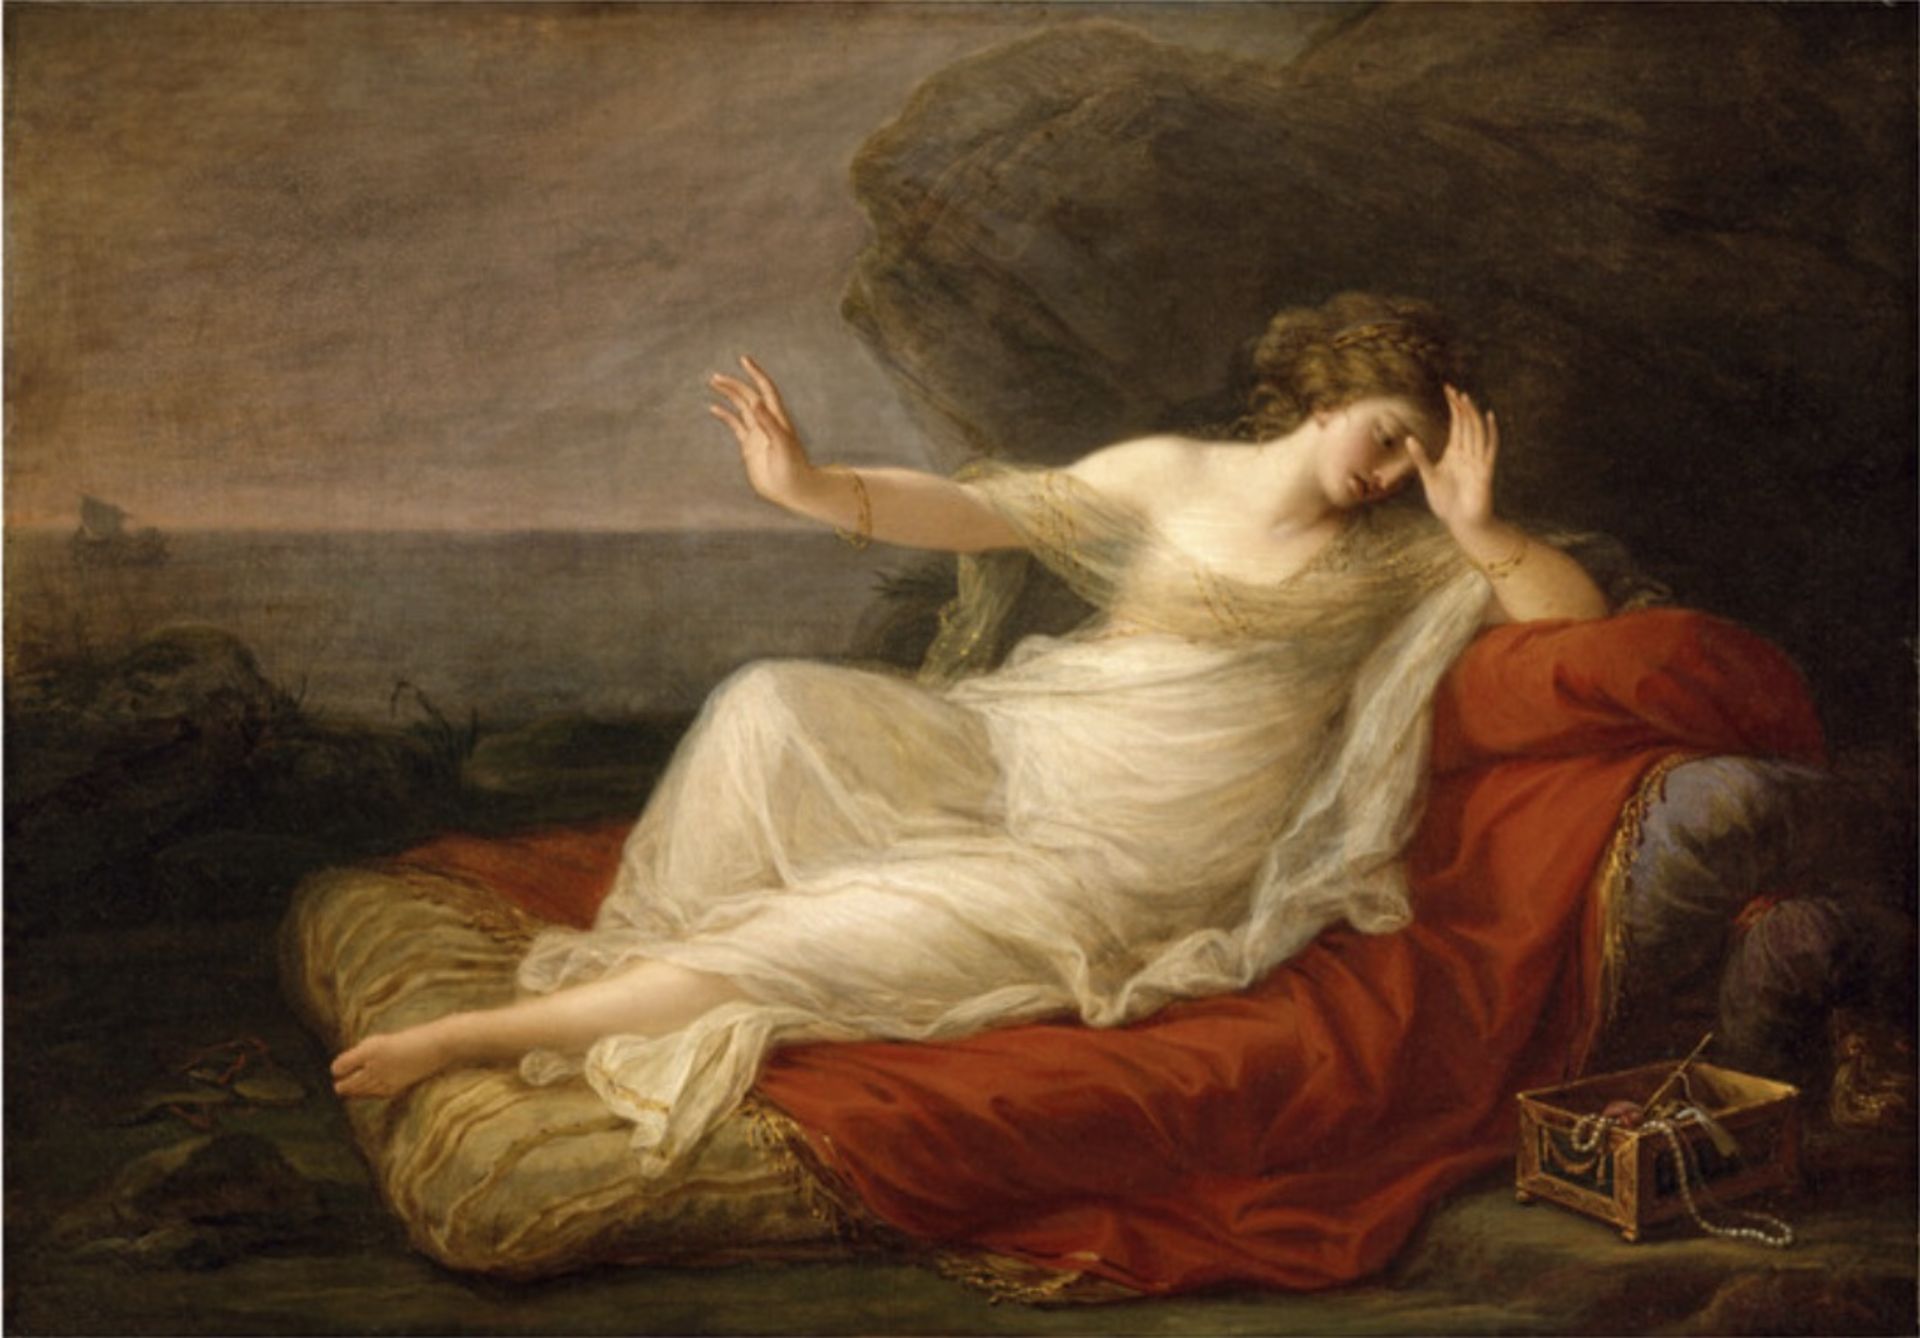 Angelica Kauffmann "Ariadne Abandoned by Theseus, 1774" Print